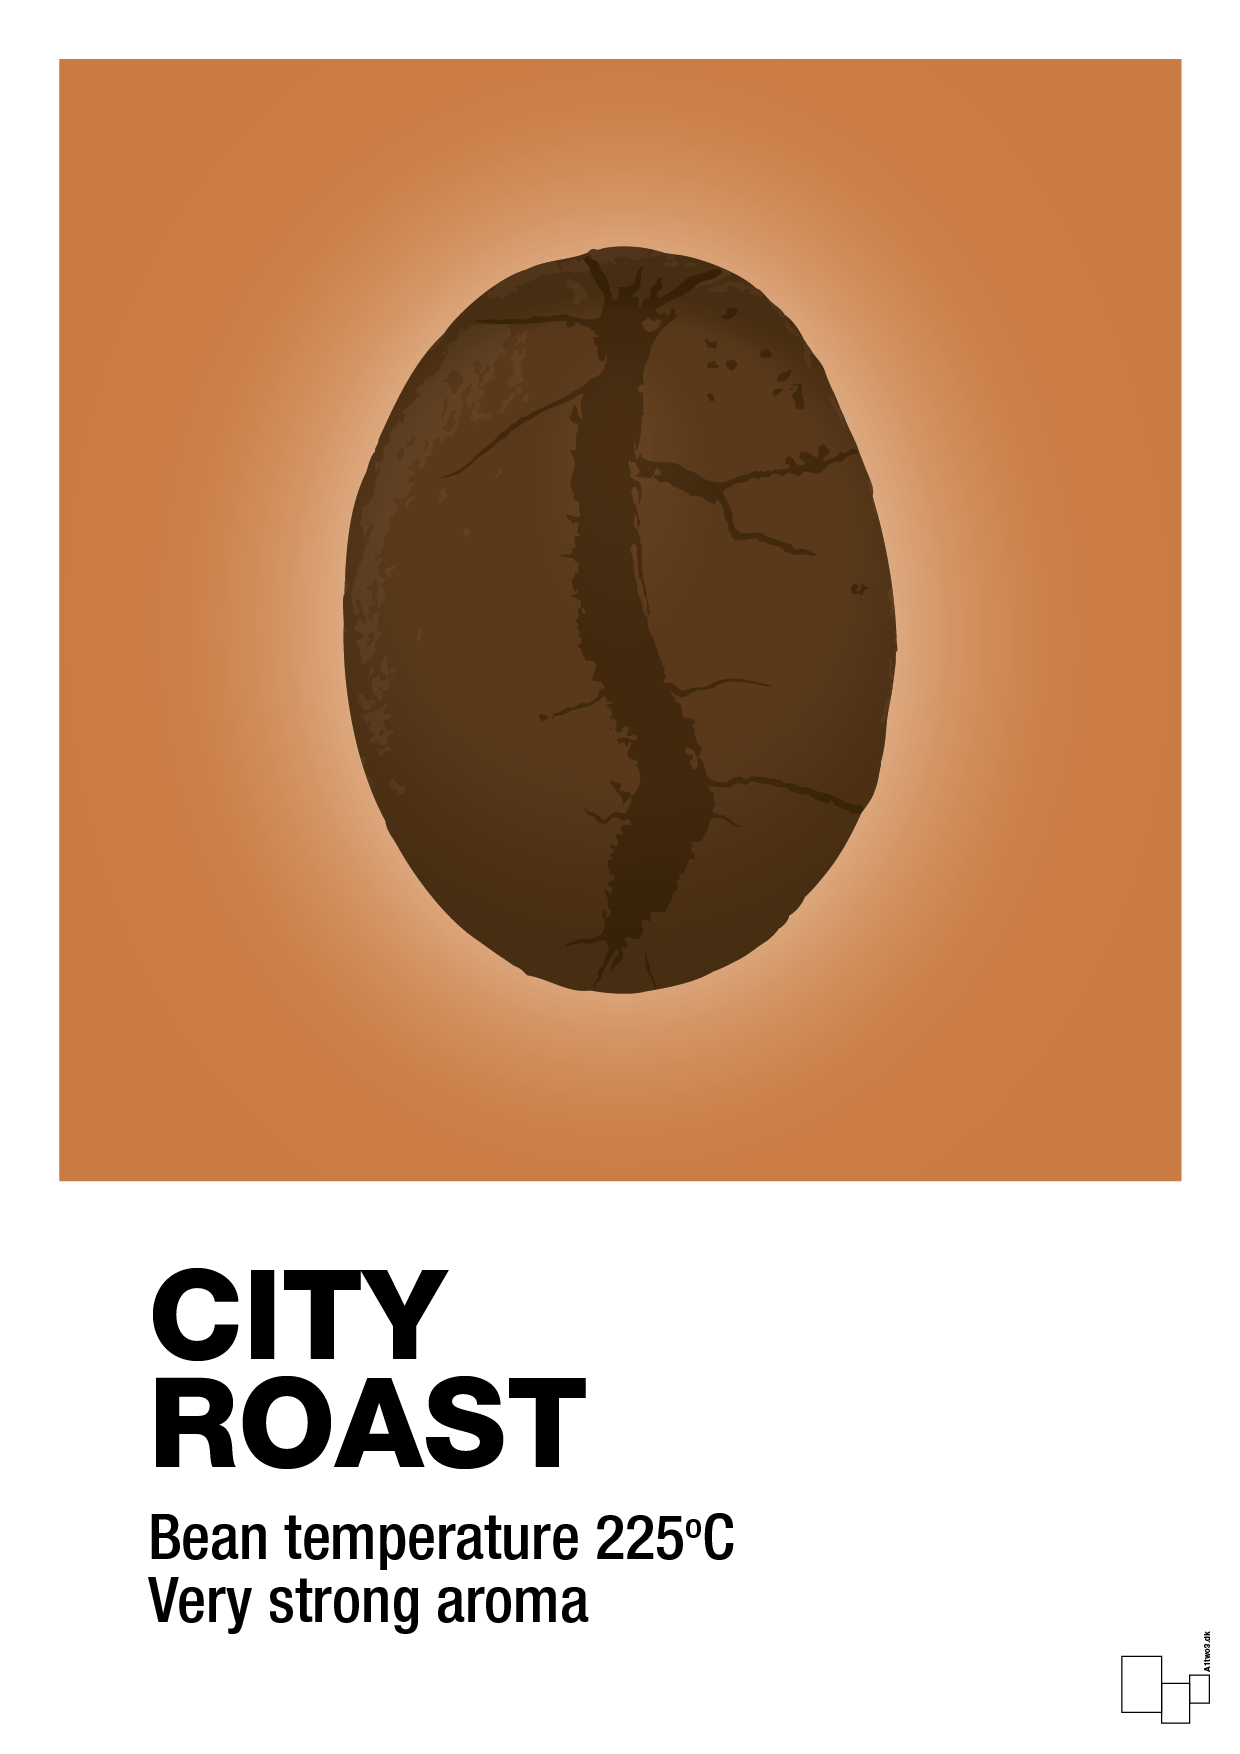 city roast - Plakat med Mad & Drikke i Rumba Orange